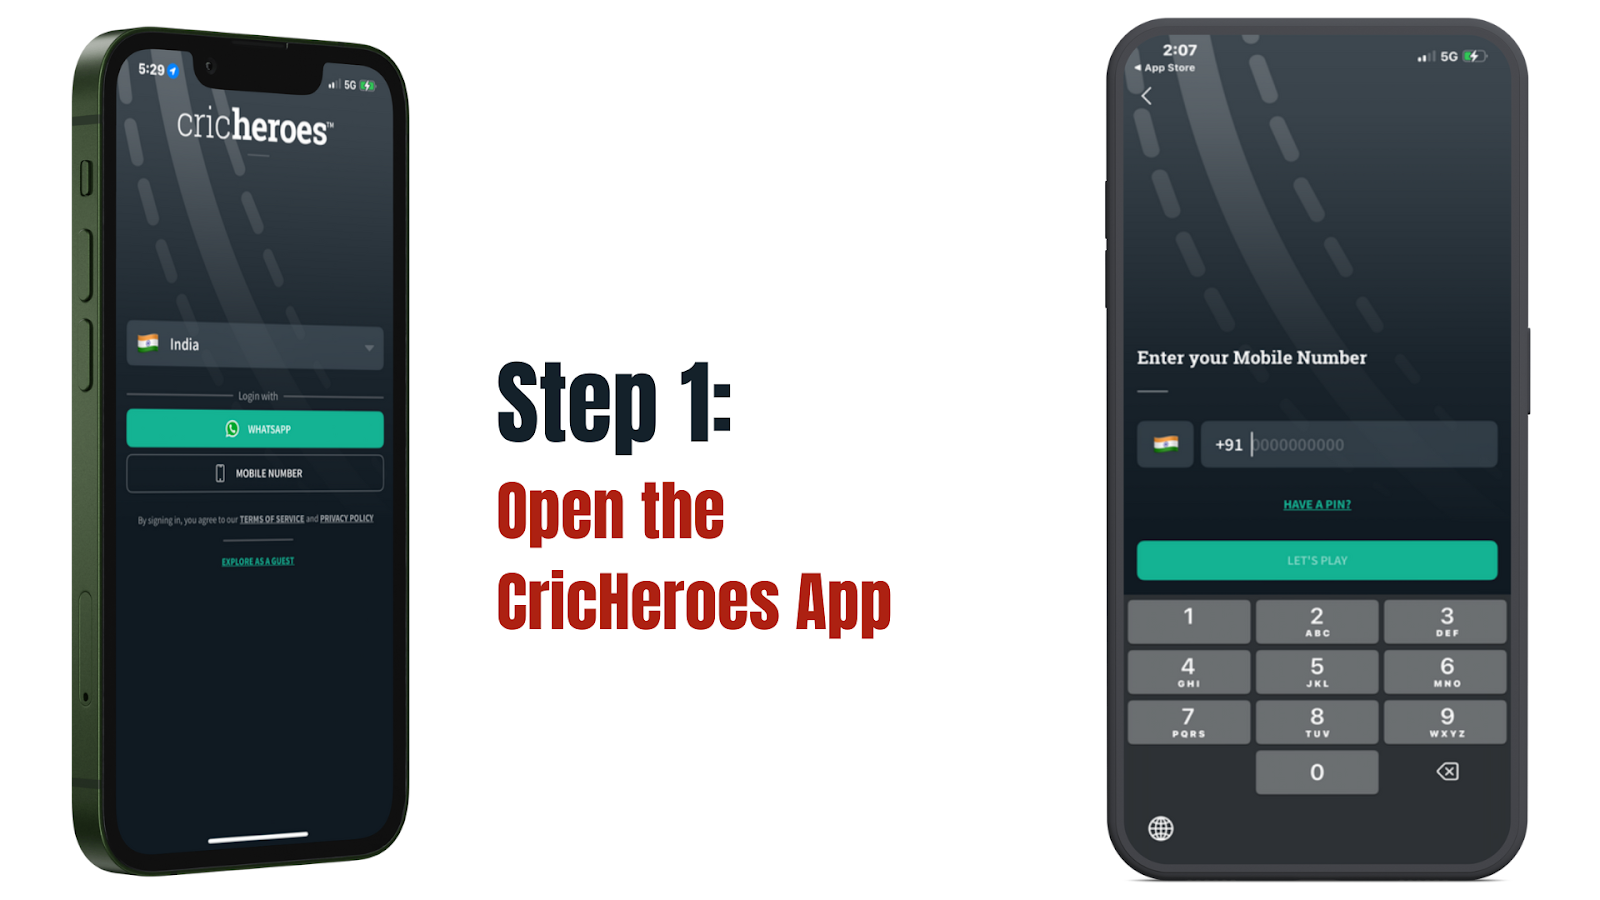 Download & Open the CricHeroes App